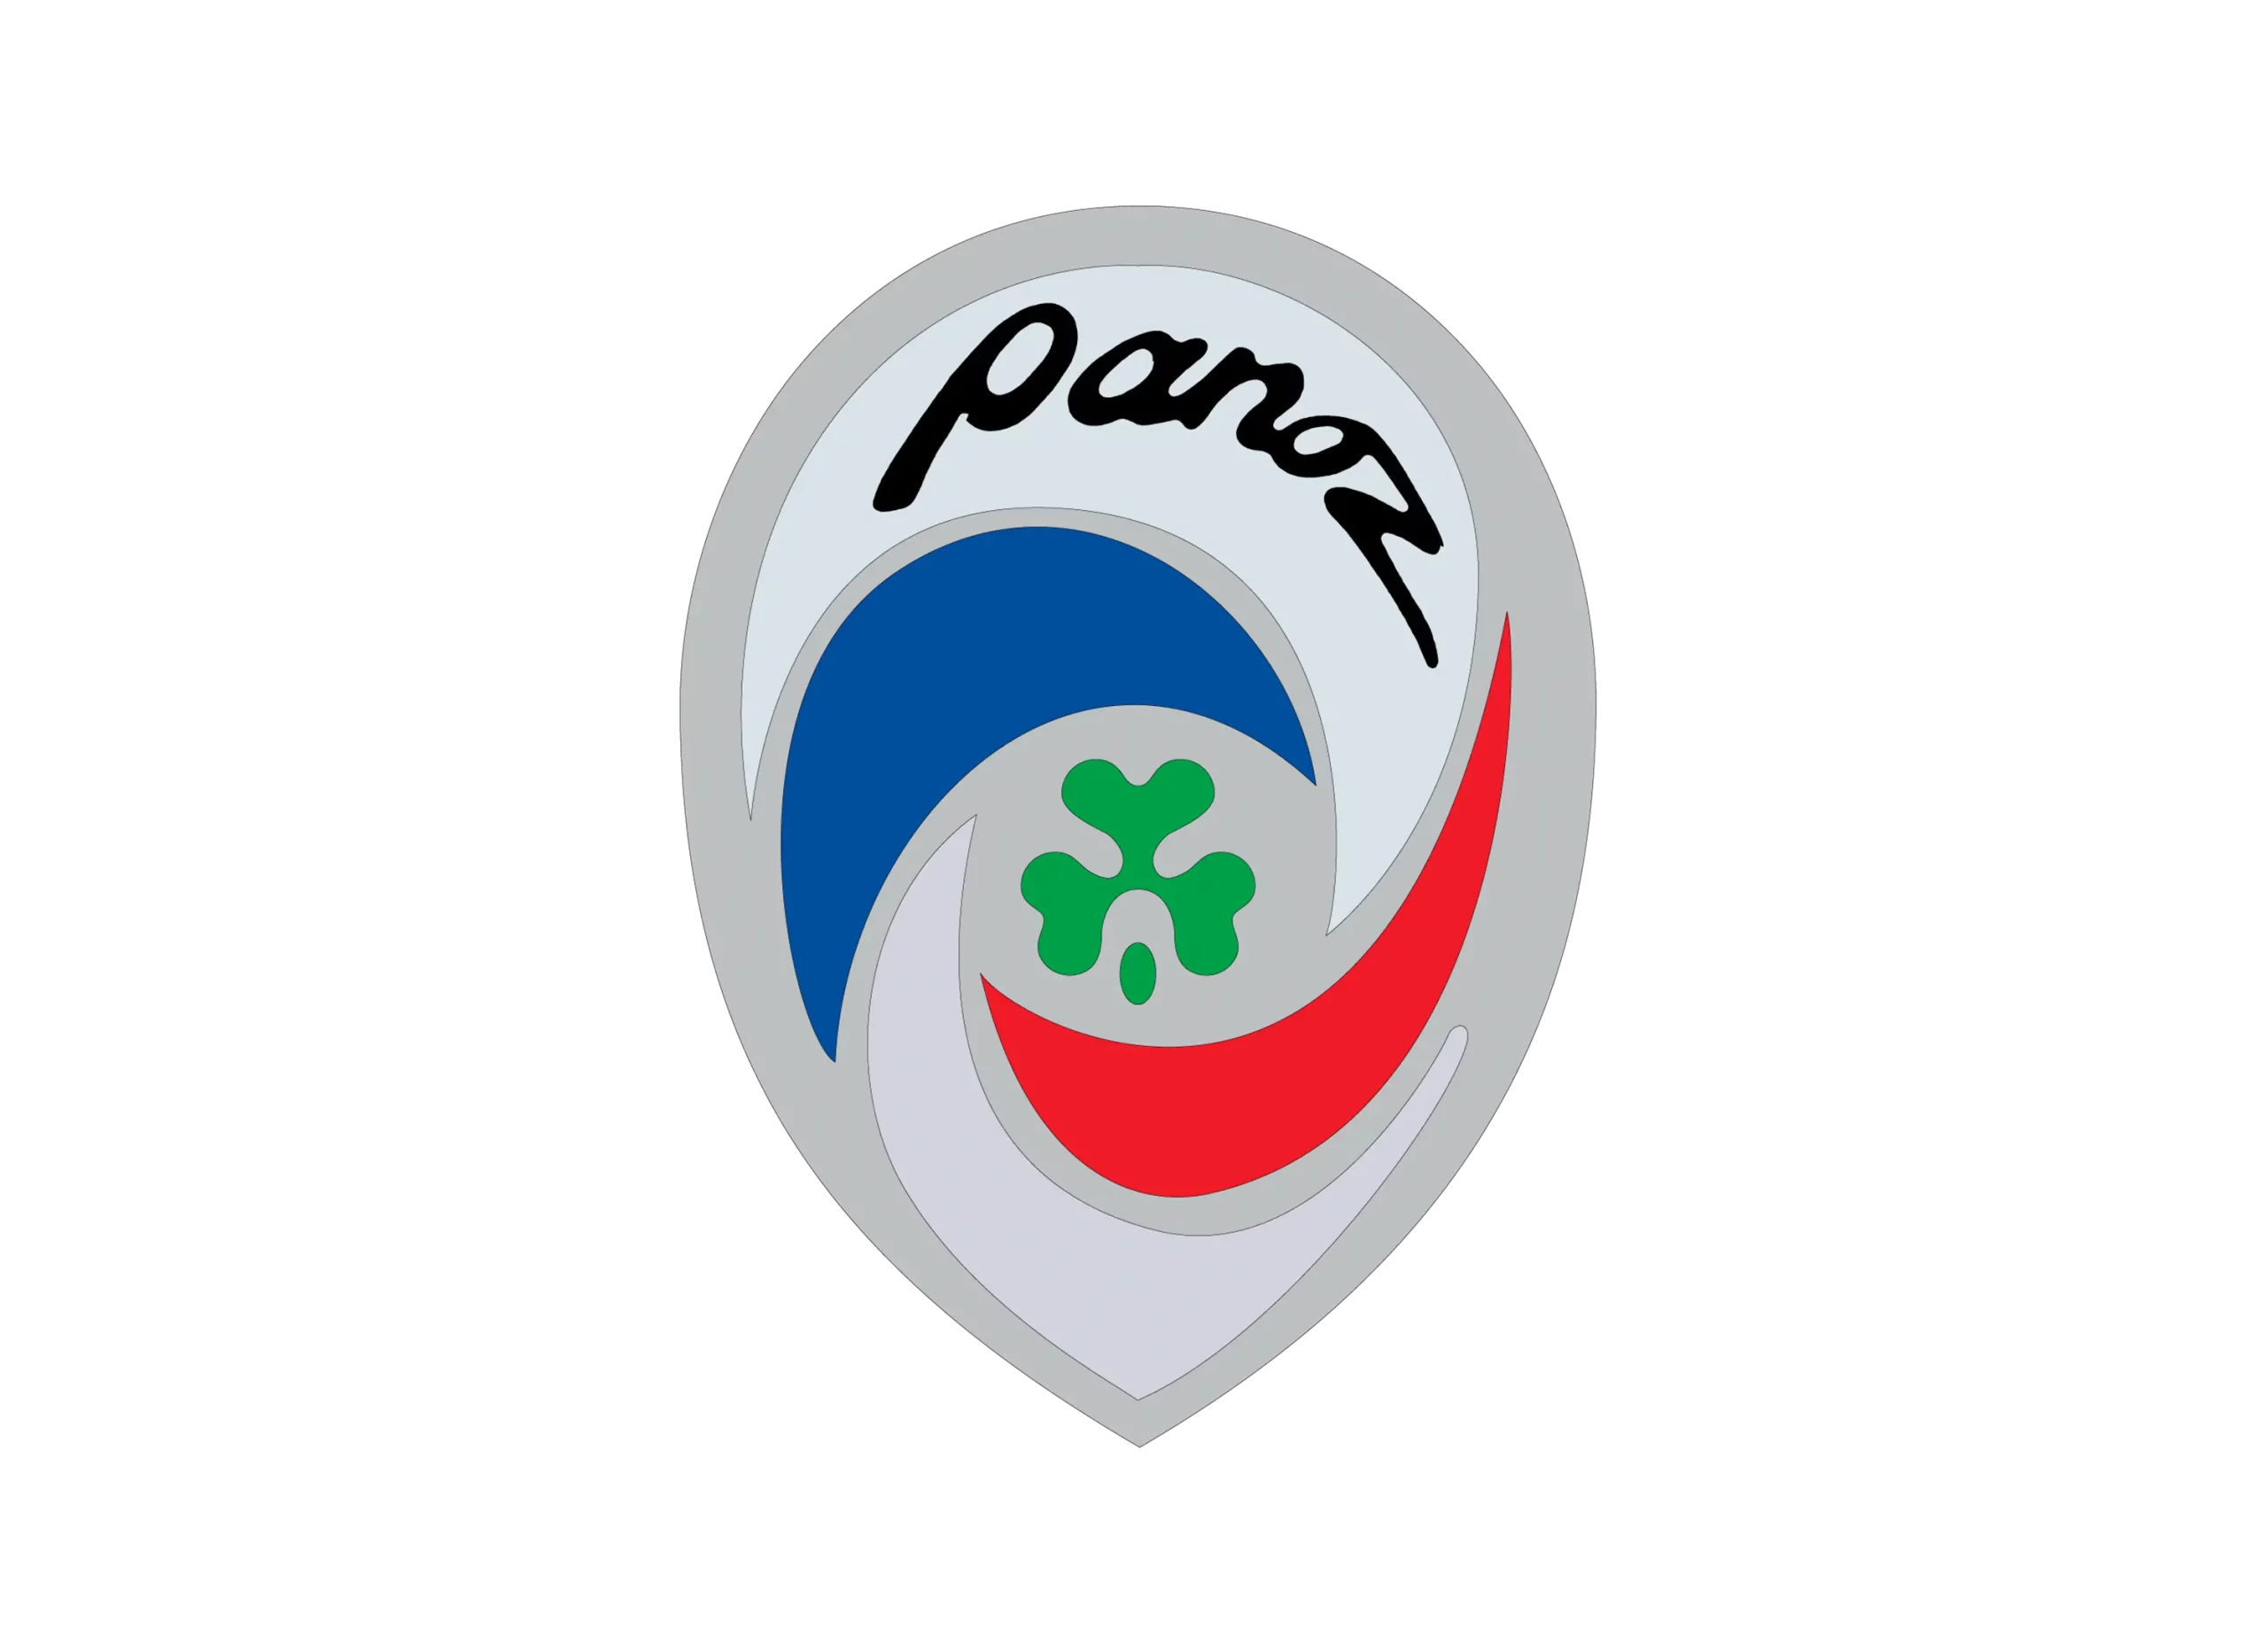 Panoz logo 1989-present